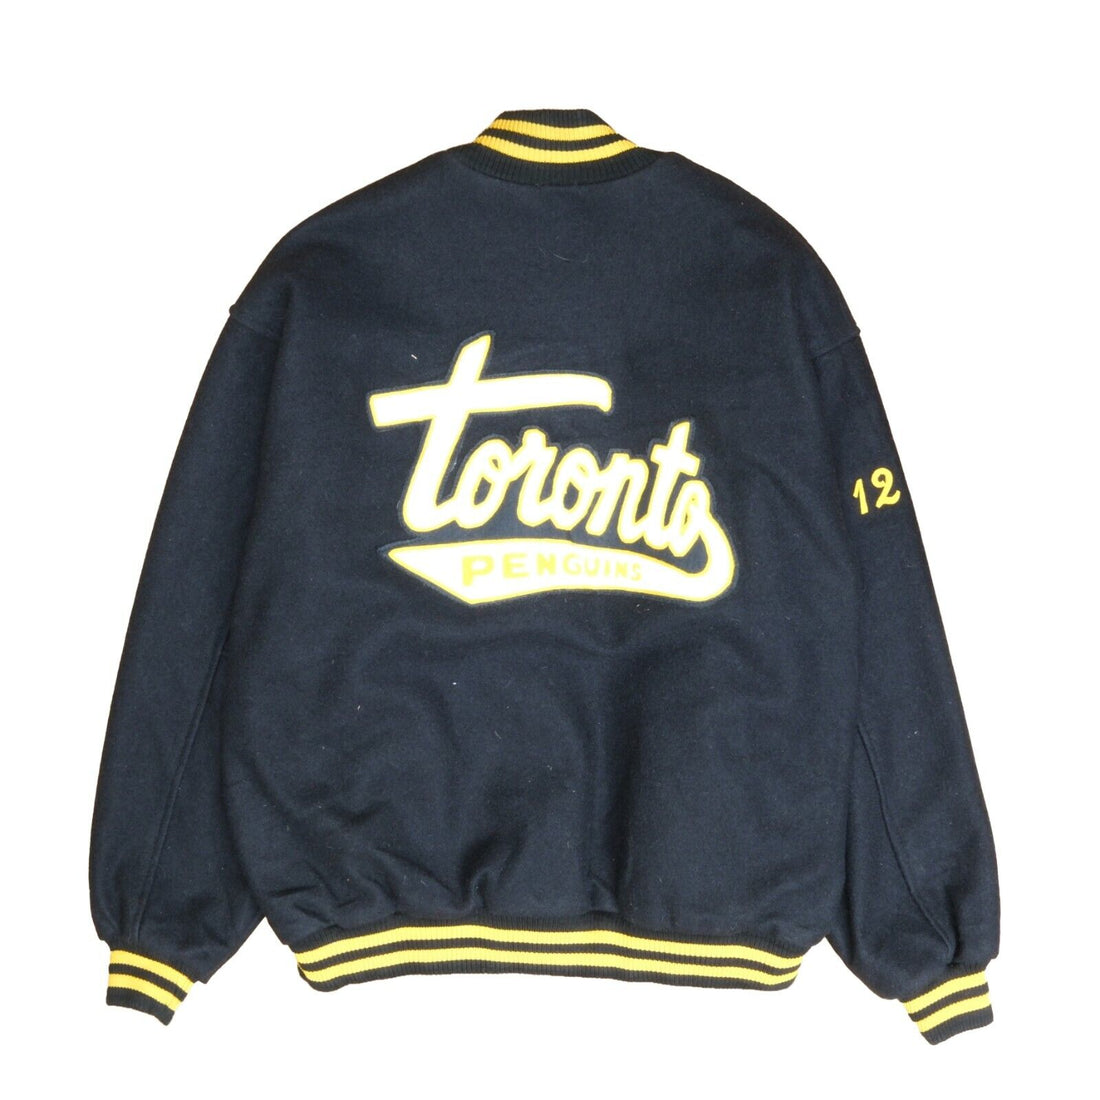 Vintage Toronto Penguins Hockey Wool Varsity Bomber Jacket Size 2XL Black